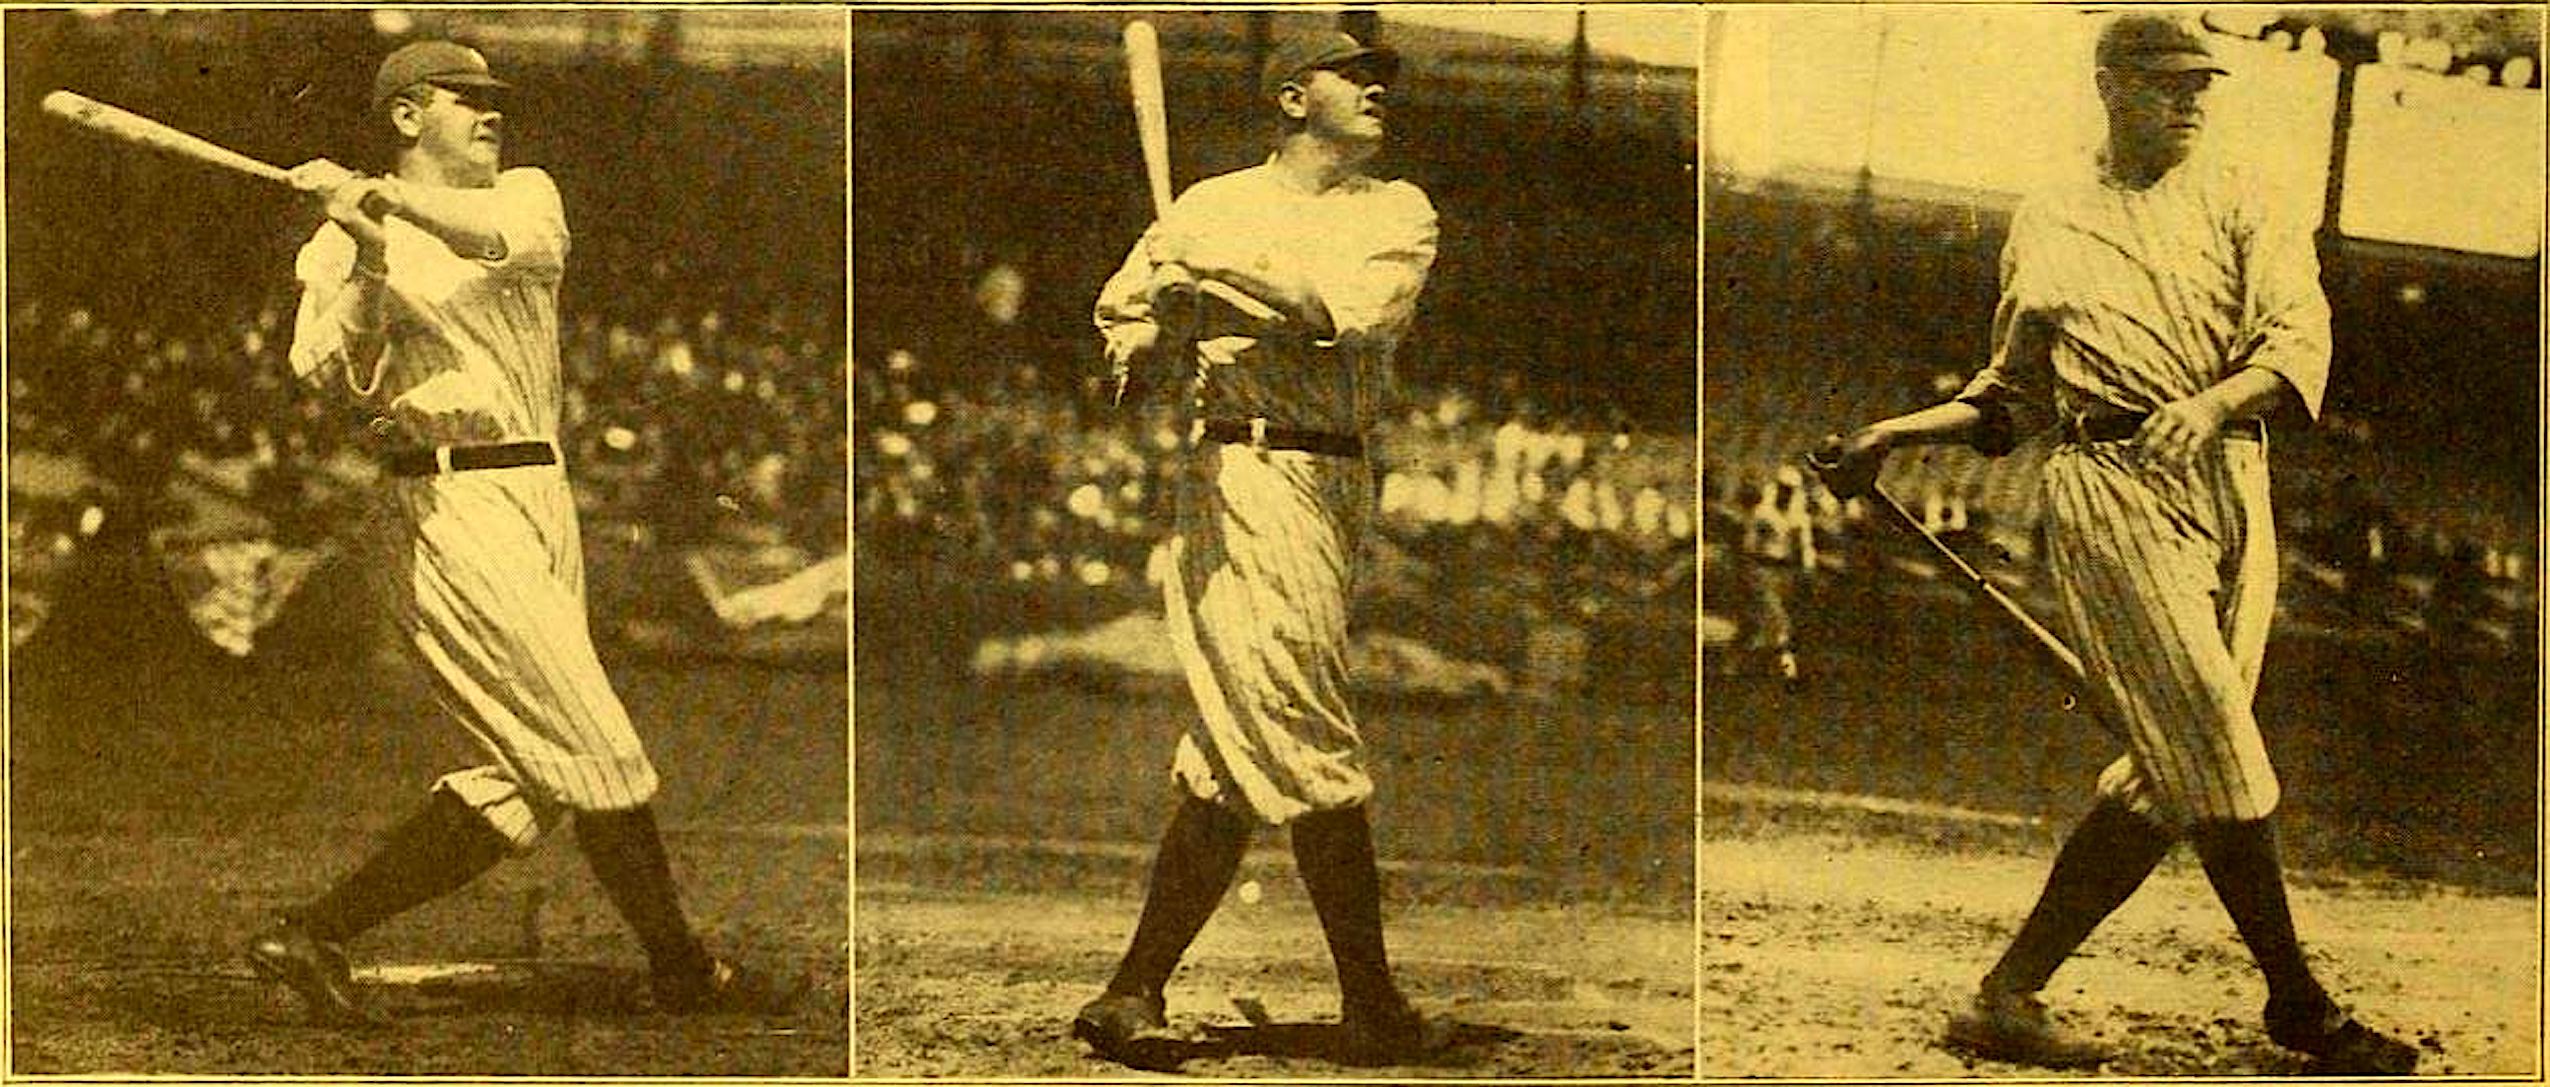 image: Baseball star Babe Ruth with a bat in his hand at a baseball game.